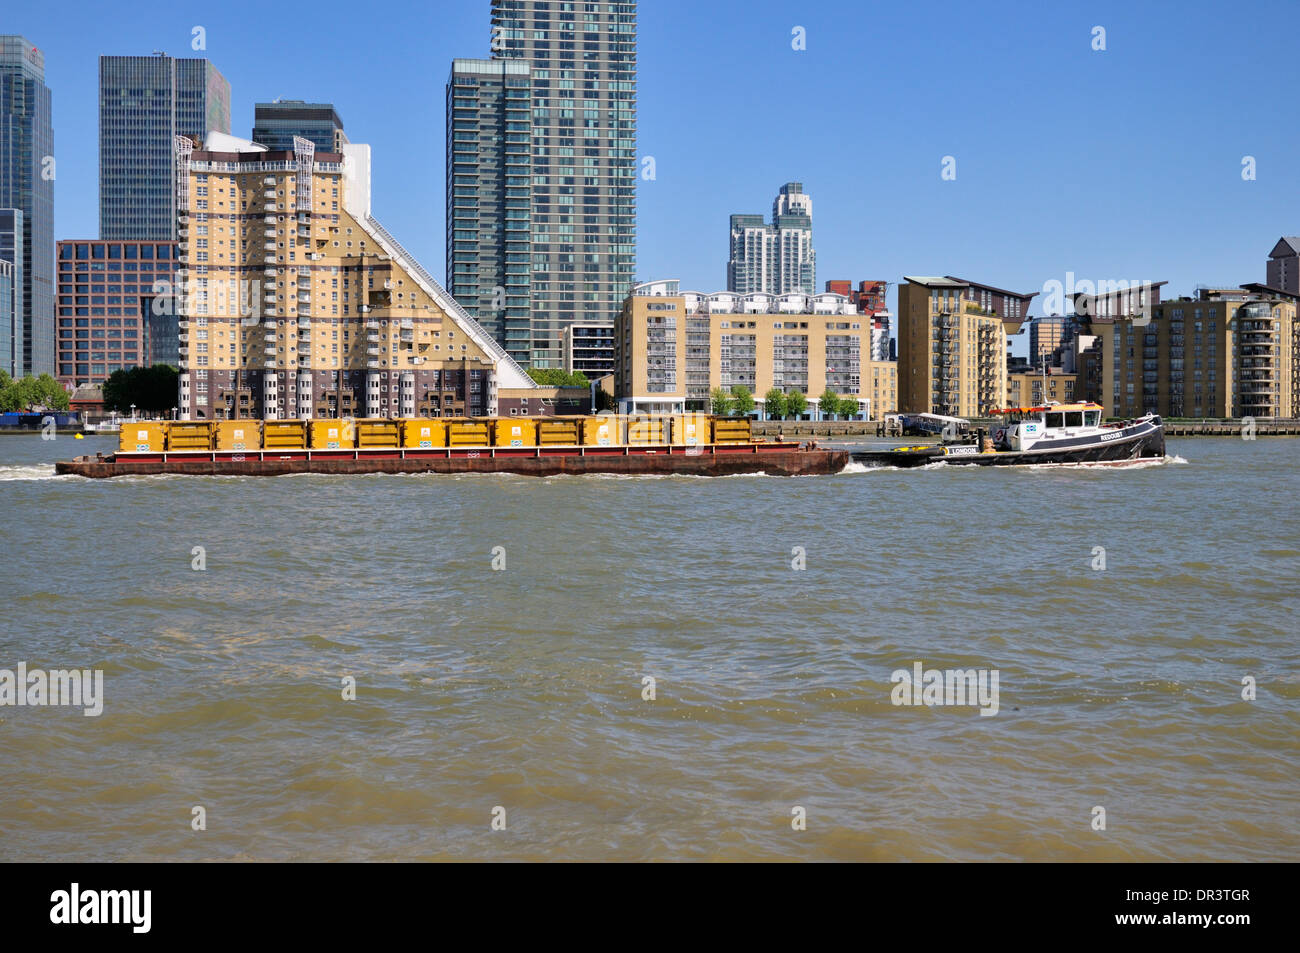 Waste transfer barge, River Thames, Canary Wharf, London, United Kingdom Stock Photo